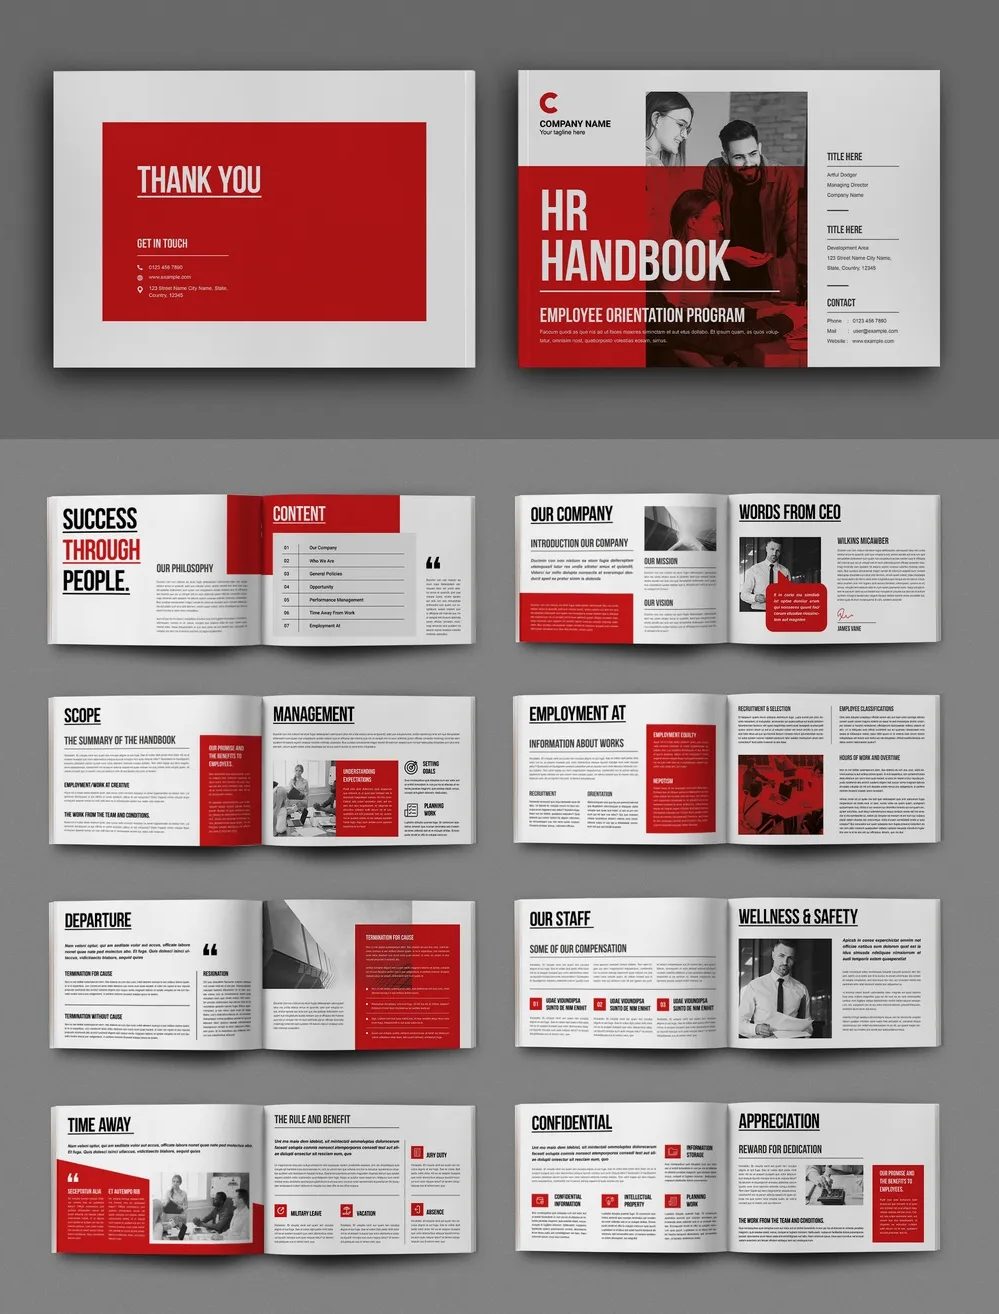 Adobestock - HR Handbook Template 723806052